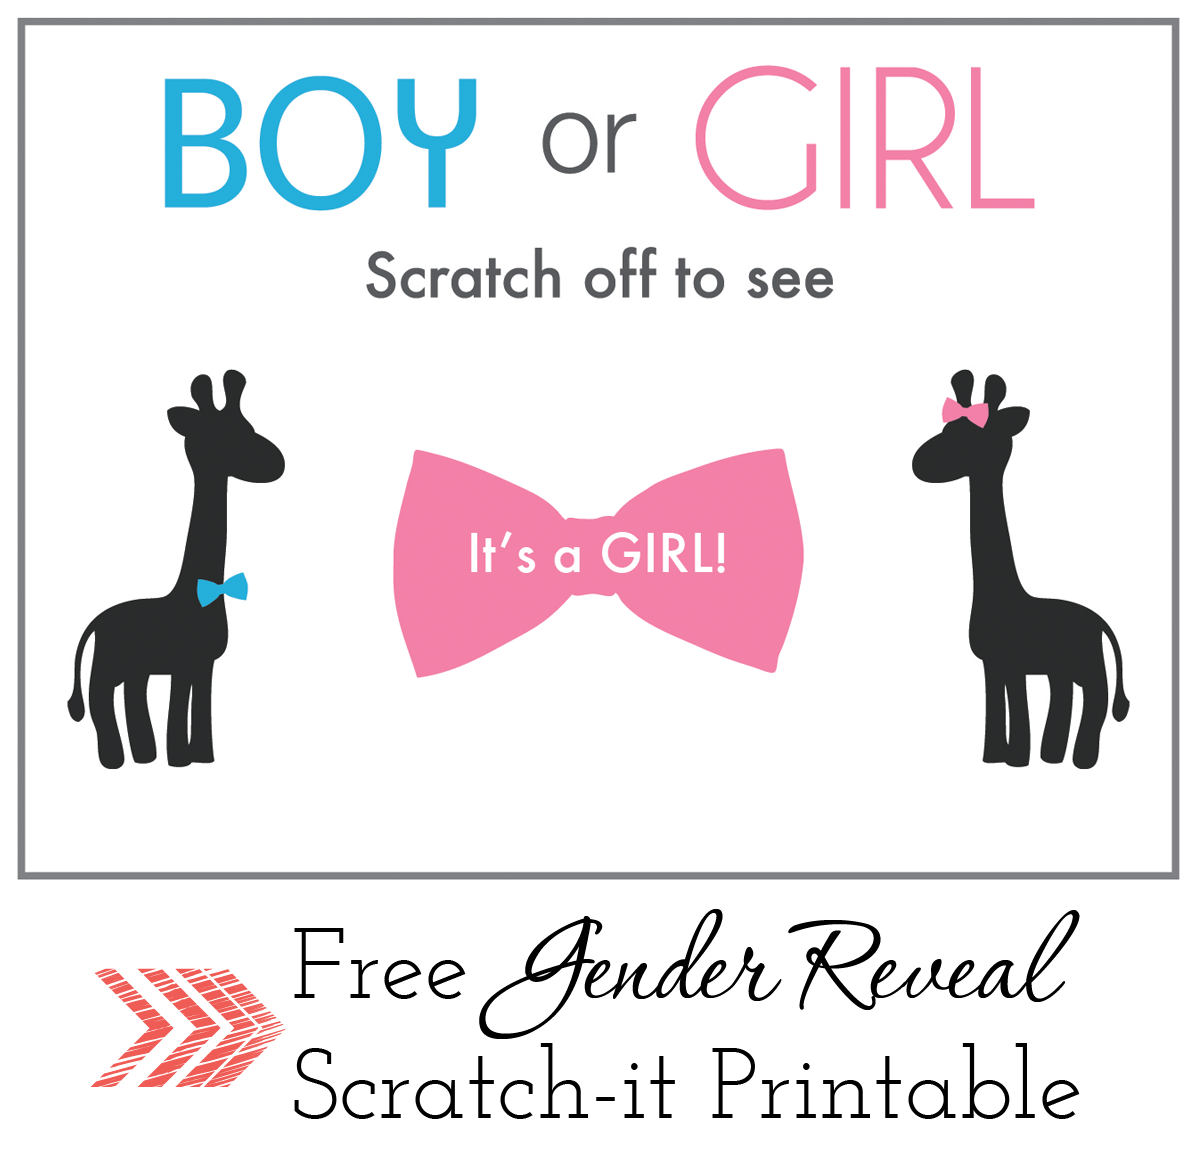 Free gender reveal scratch-it printable!